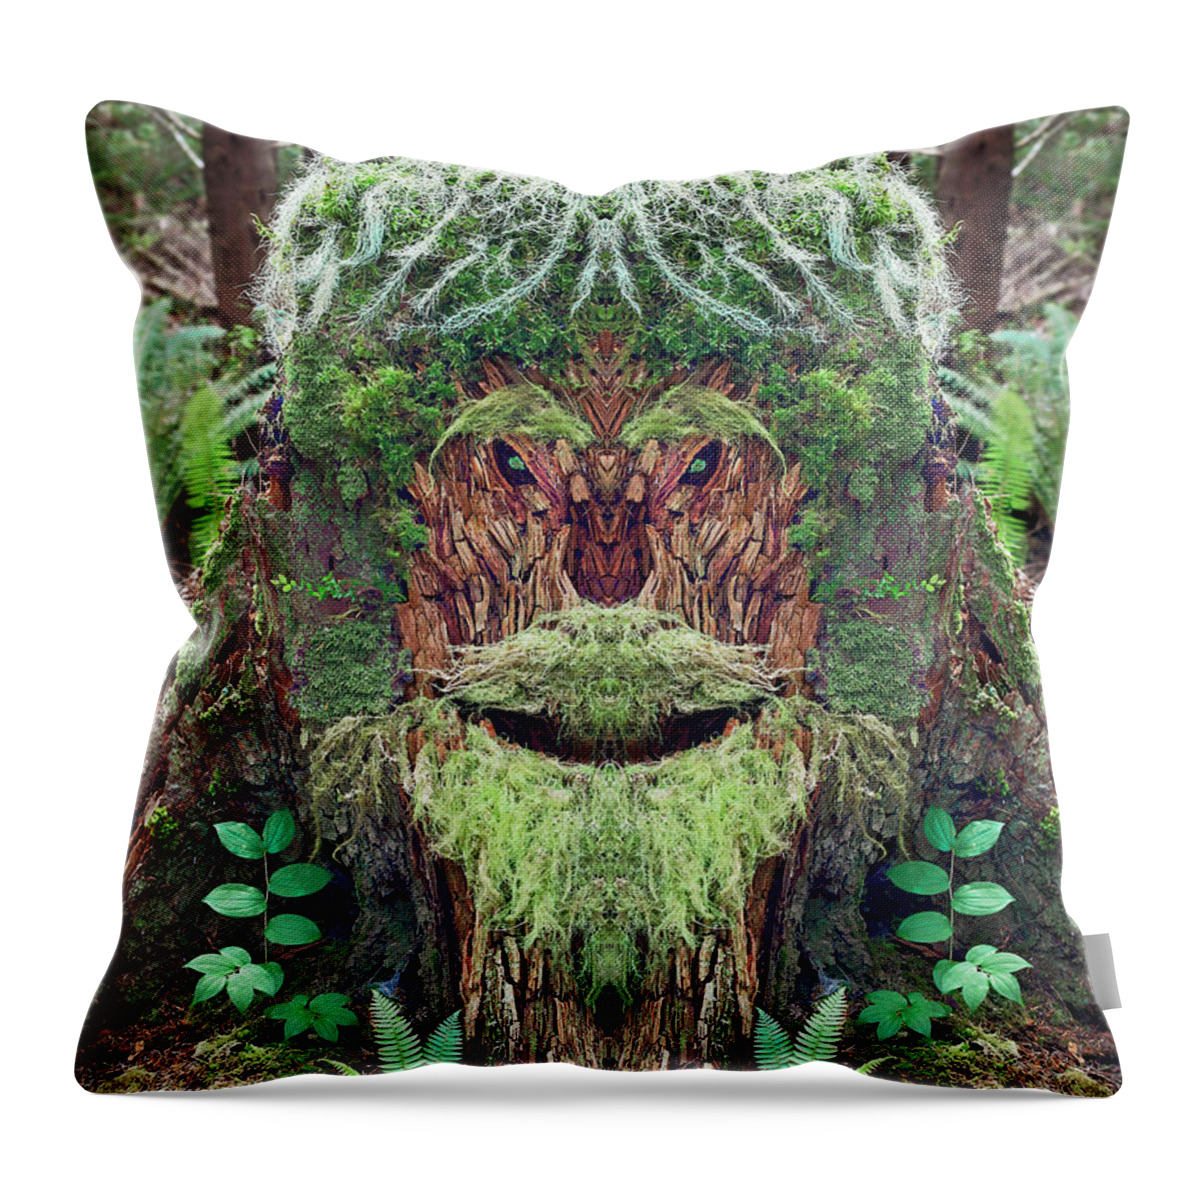 Moss Throw Pillow featuring the photograph Mossman Tree Stump by Martin Konopacki